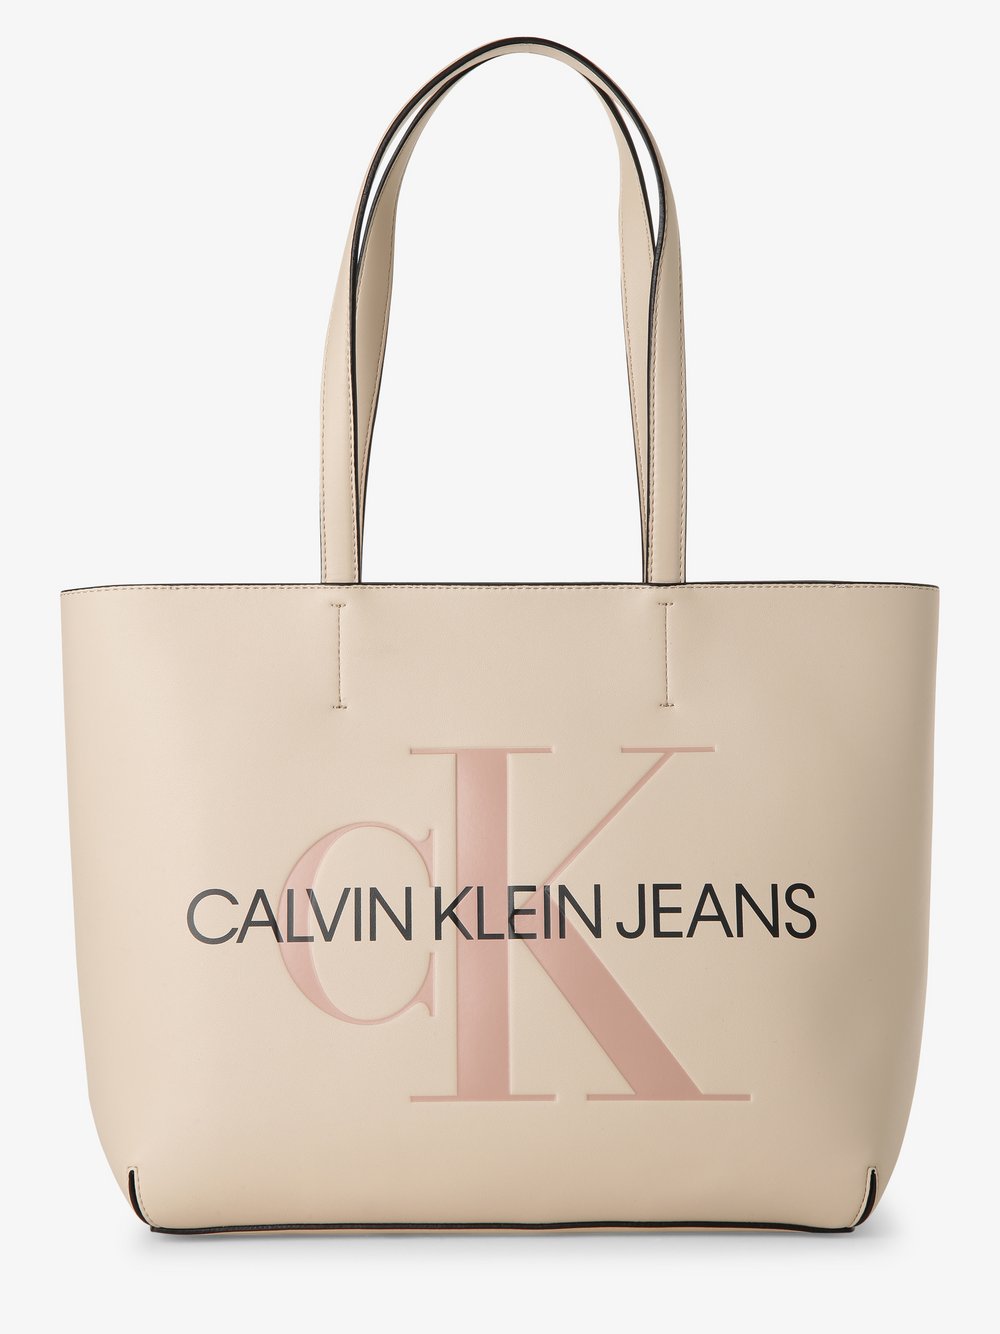 Calvin Klein Jeans - Damska torba shopper, beżowy